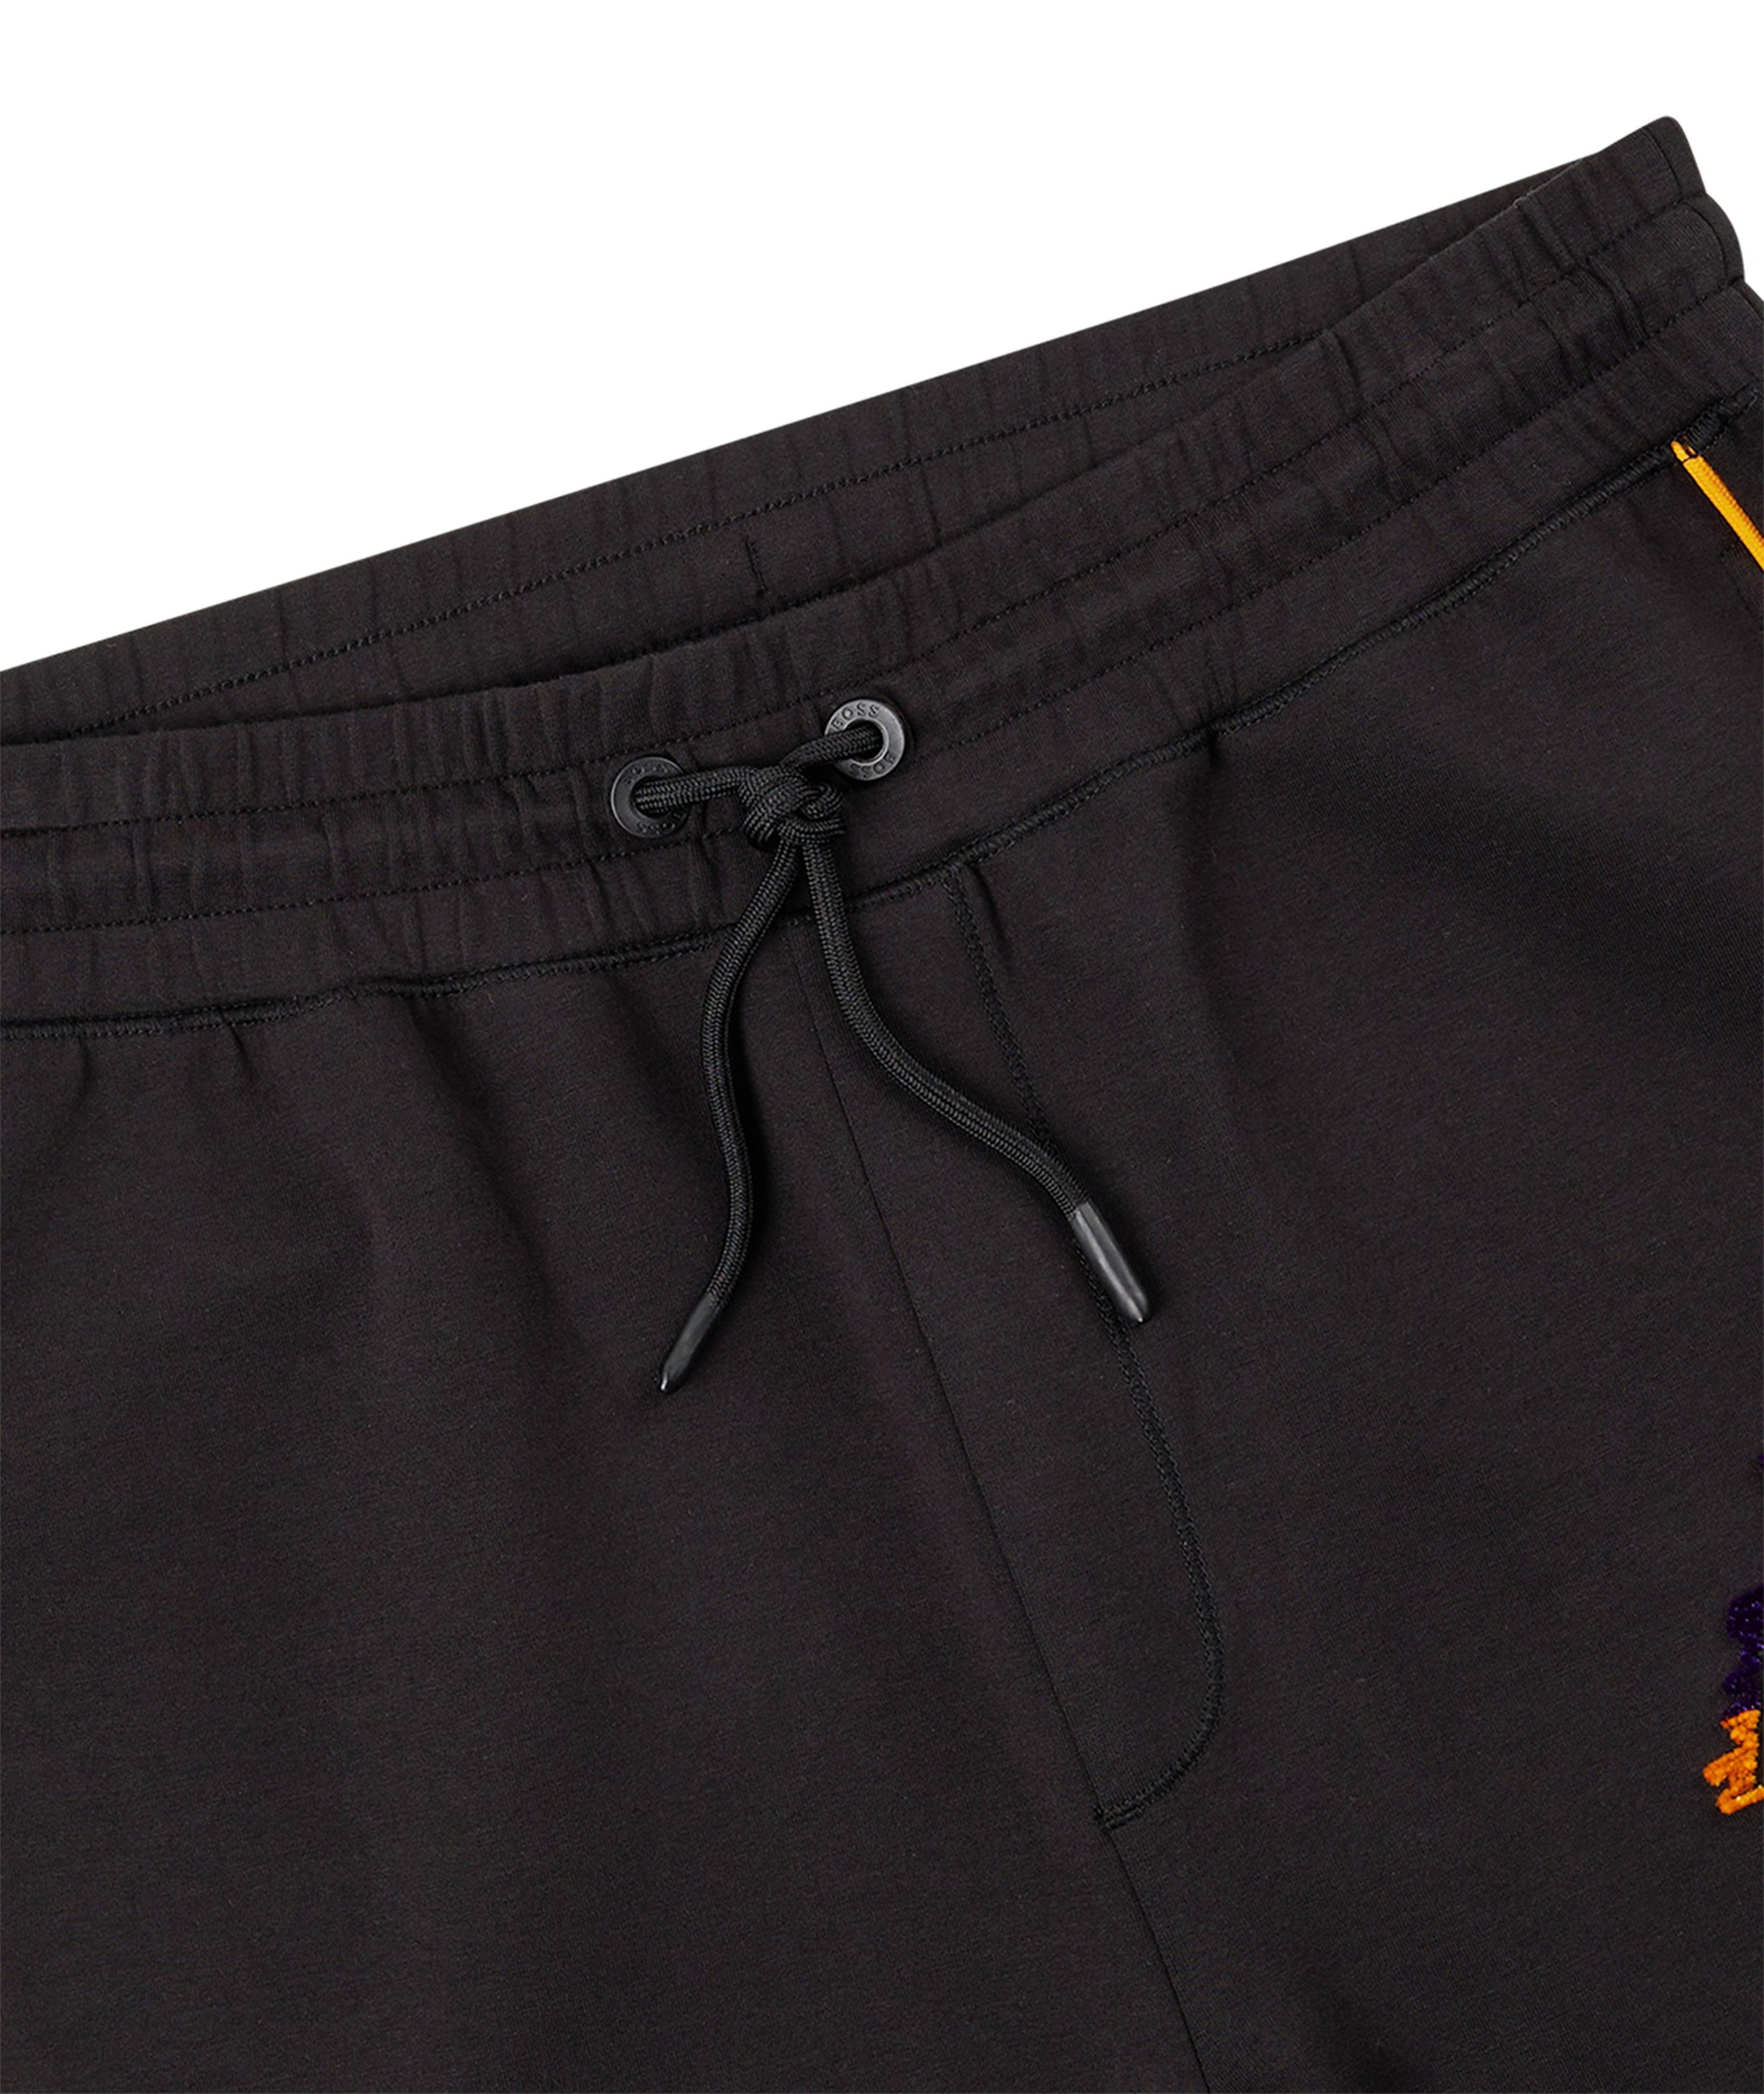 BOSS X NBA Cotton-Blend Lakers Shorts image 1